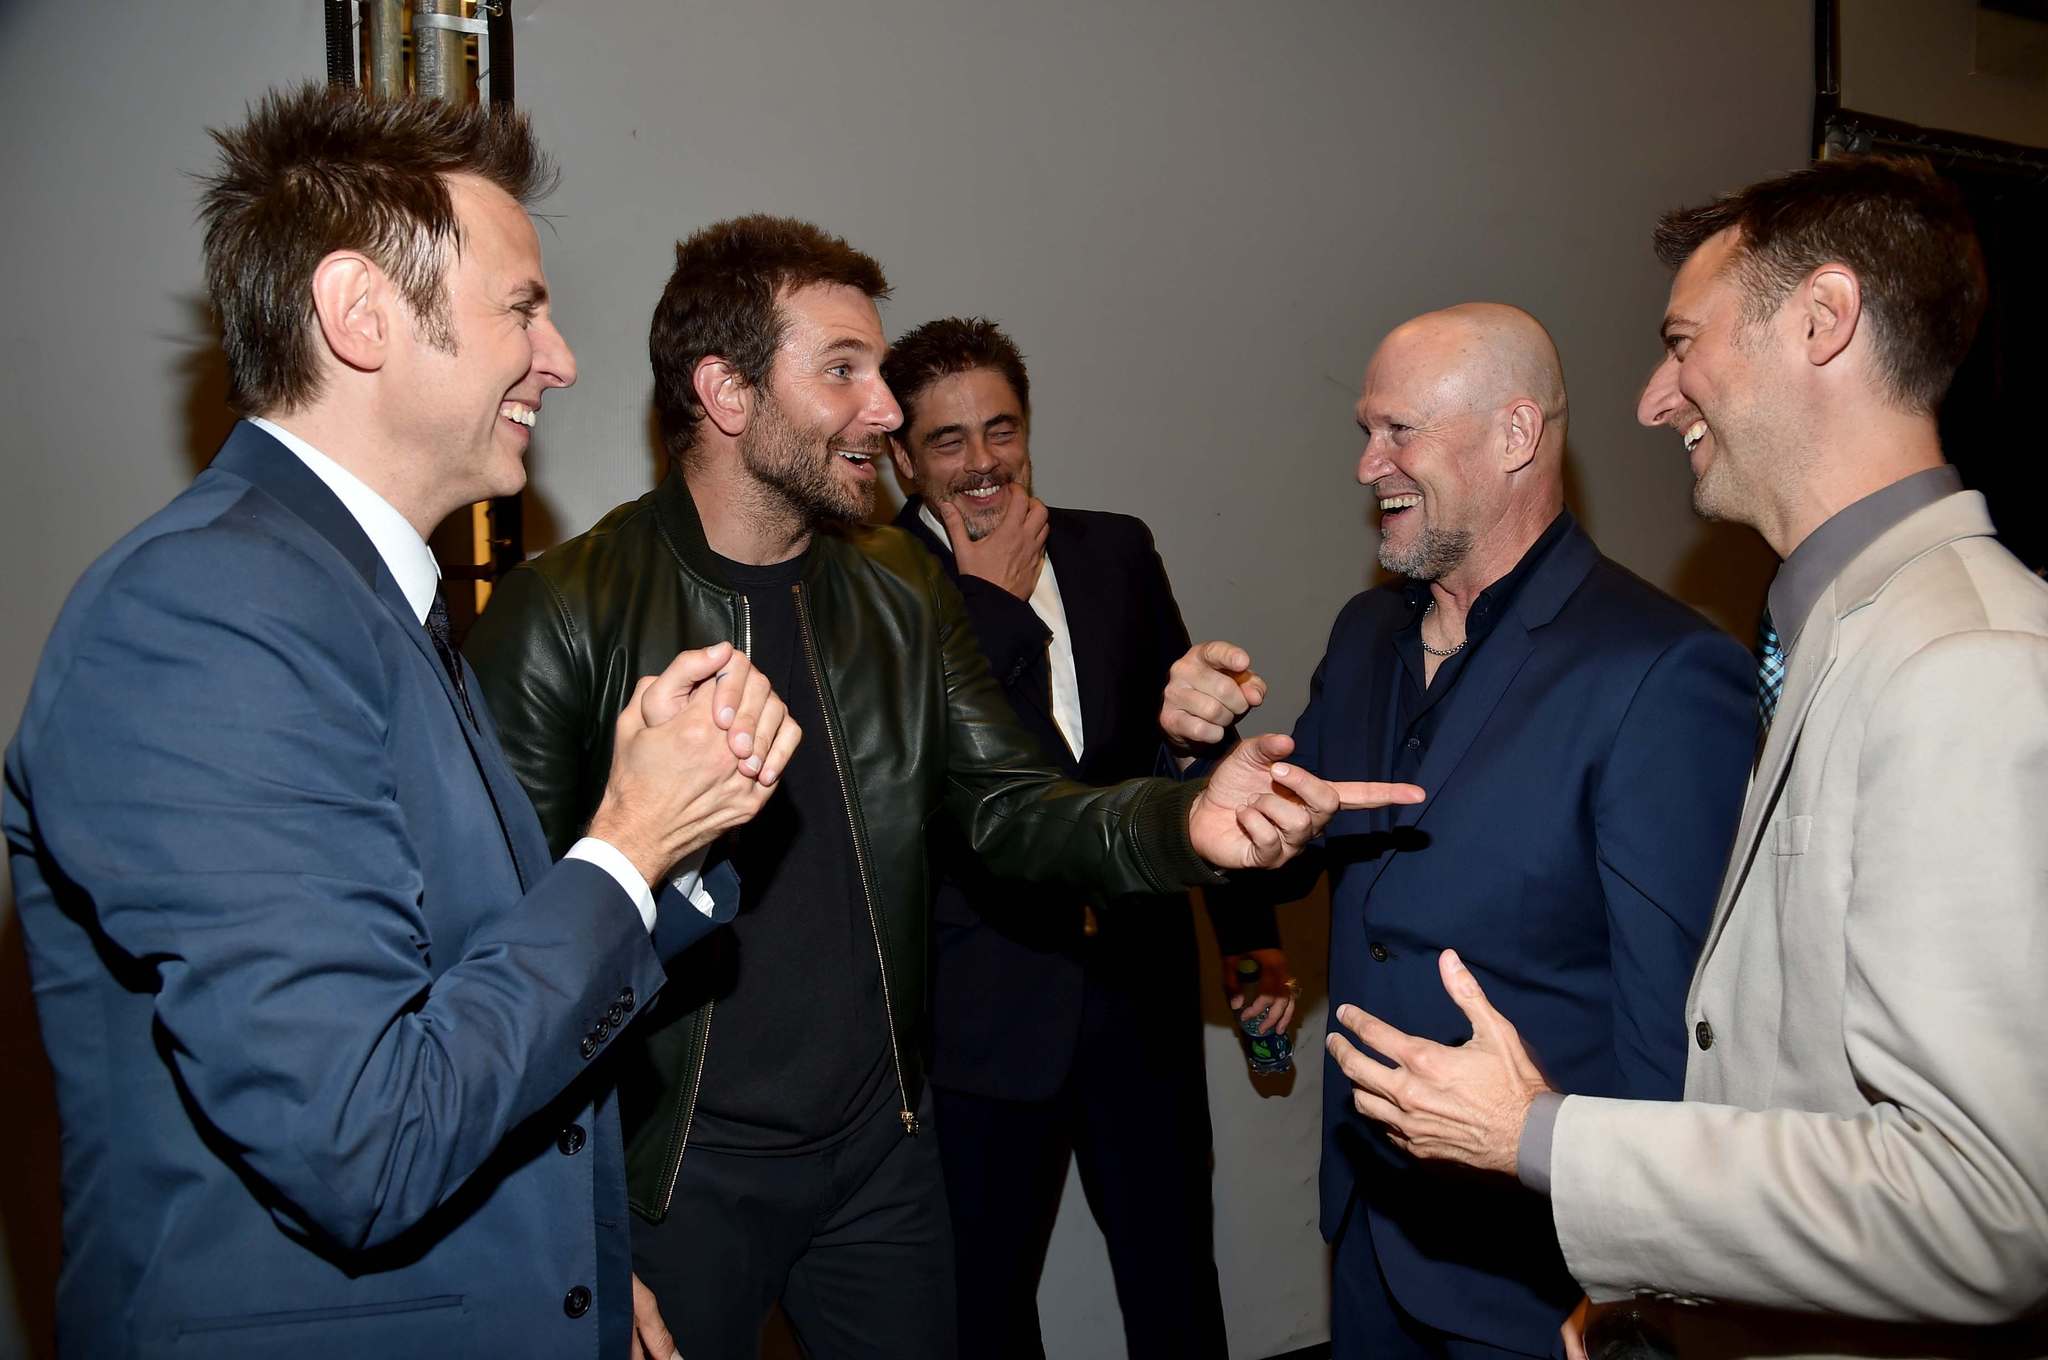 Benicio Del Toro, Bradley Cooper, James Gunn, Sean Gunn and Michael Rooker at event of Galaktikos sergetojai (2014)